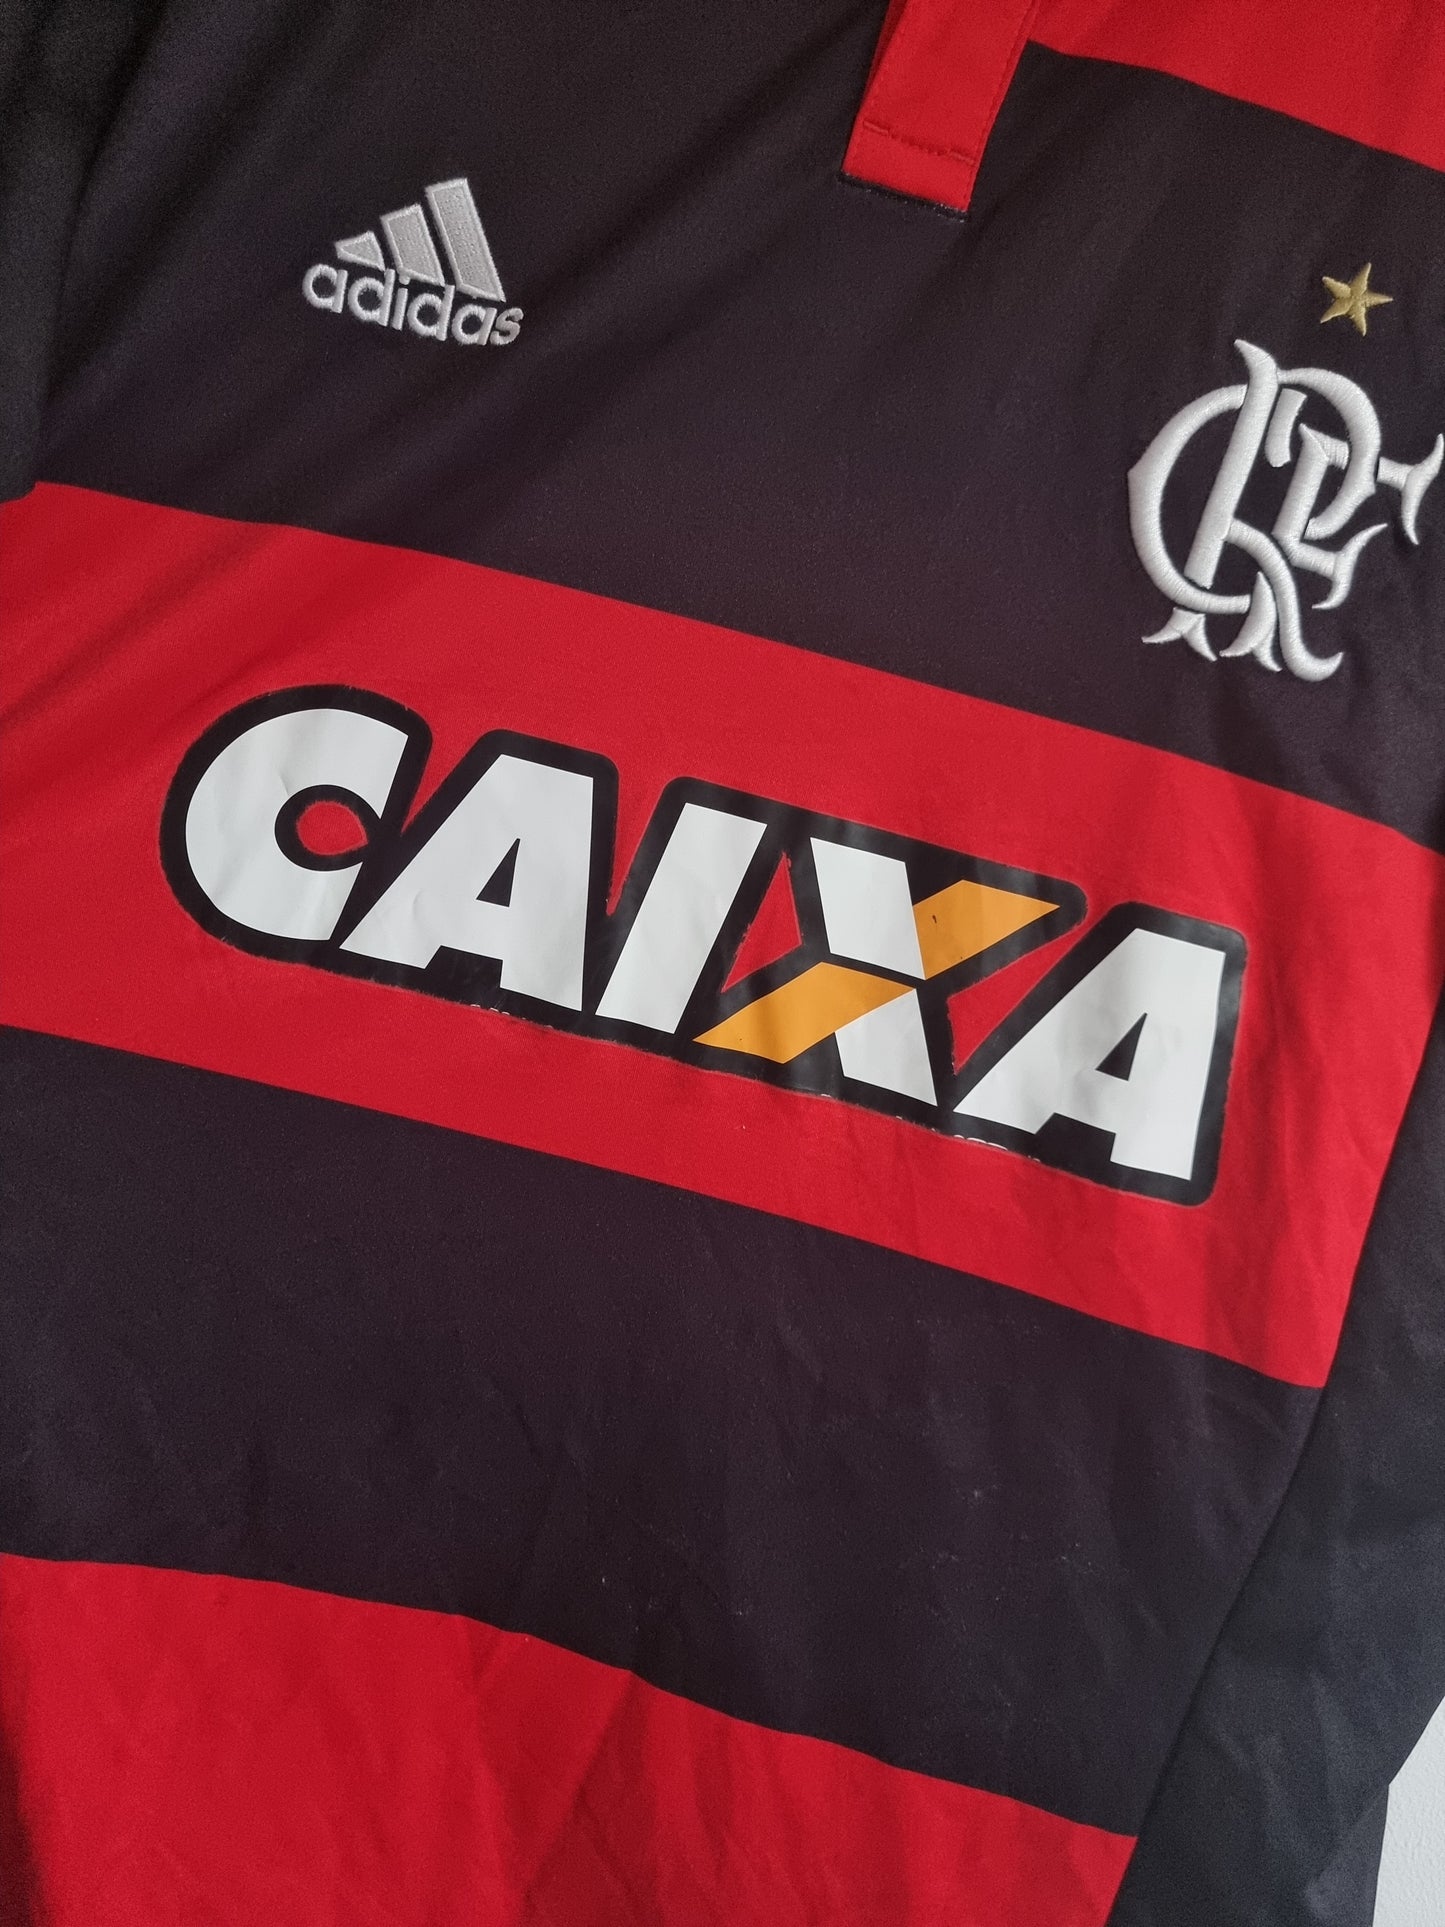 Adidas Flamengo 14/15 Home Shirt Large